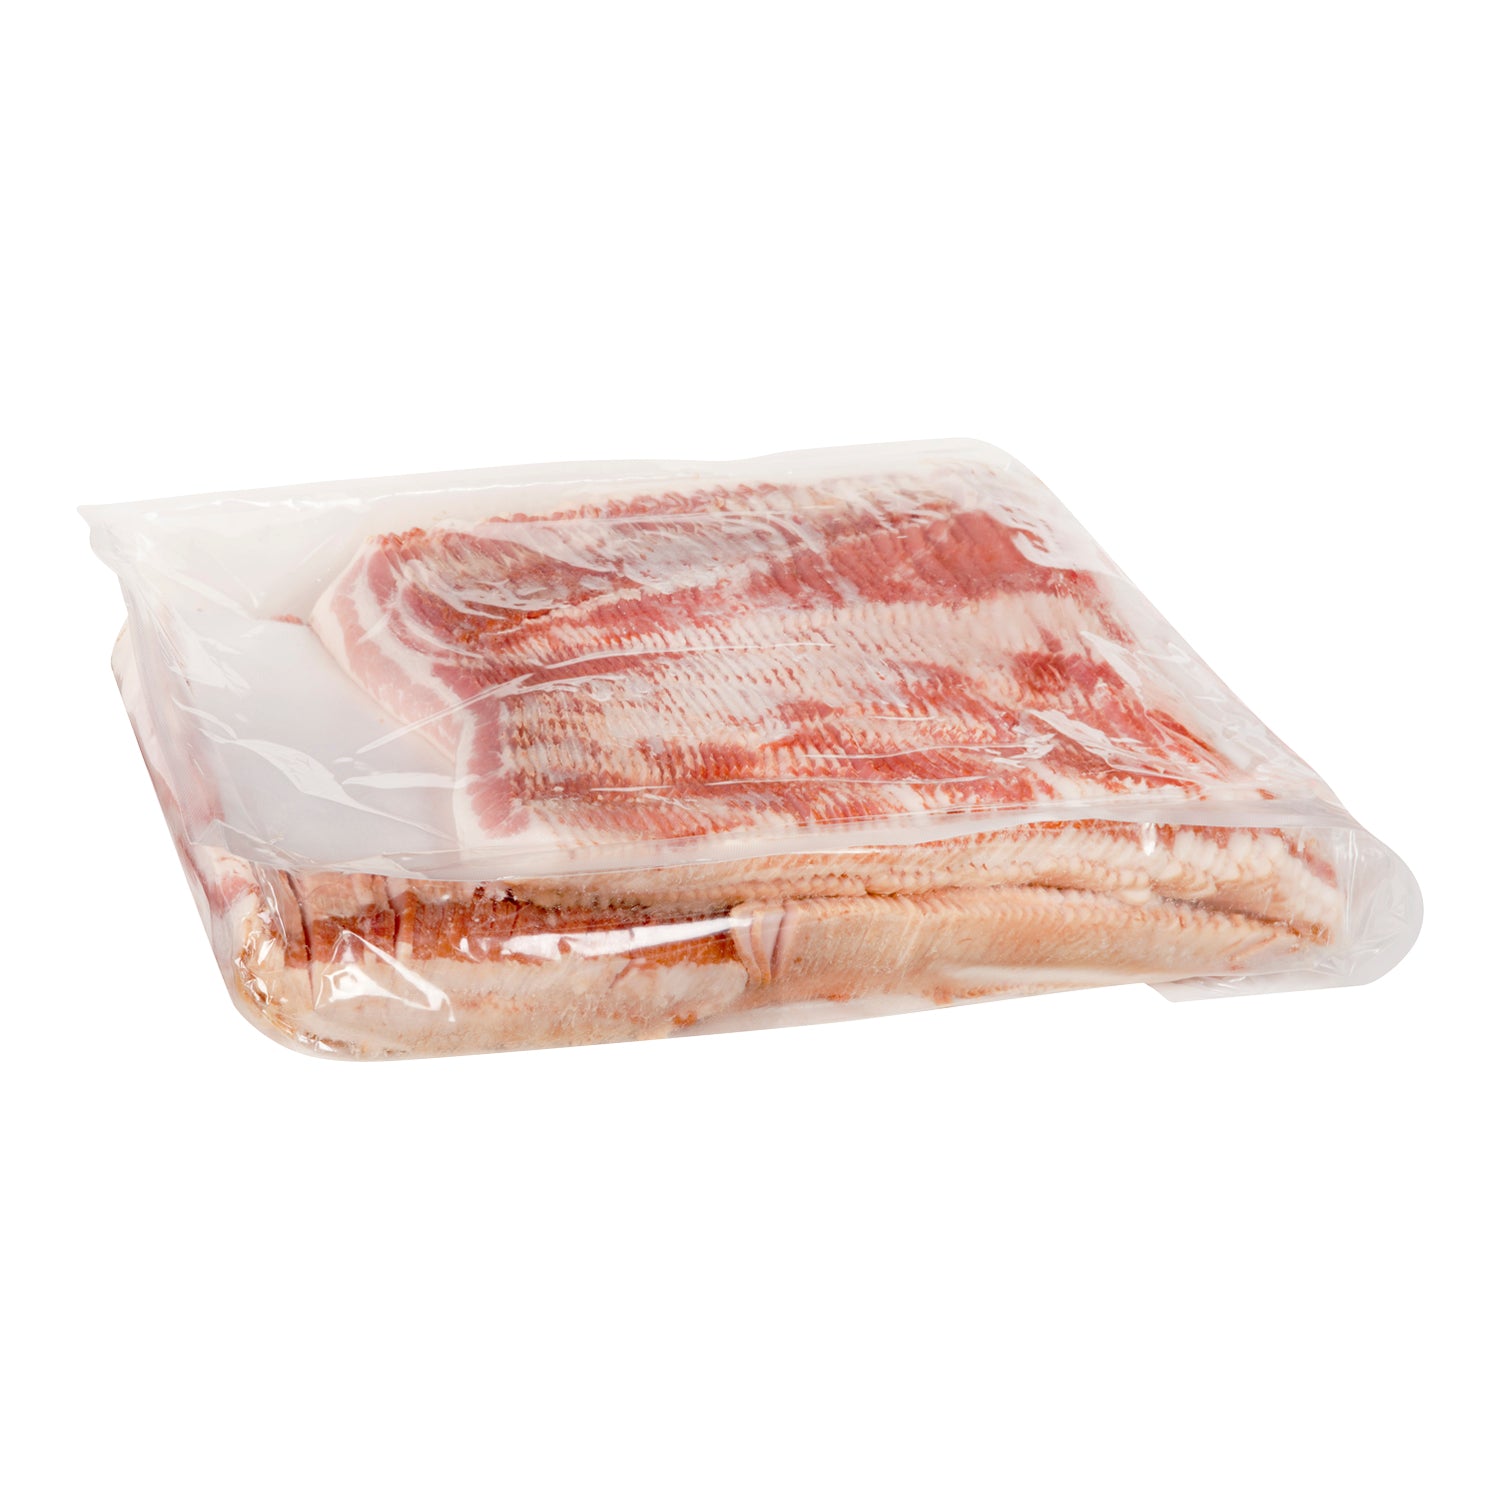 Sysco Classic Center Cut Sliced Bacon 5kg [$9.99/kg] [$4.53/lb]